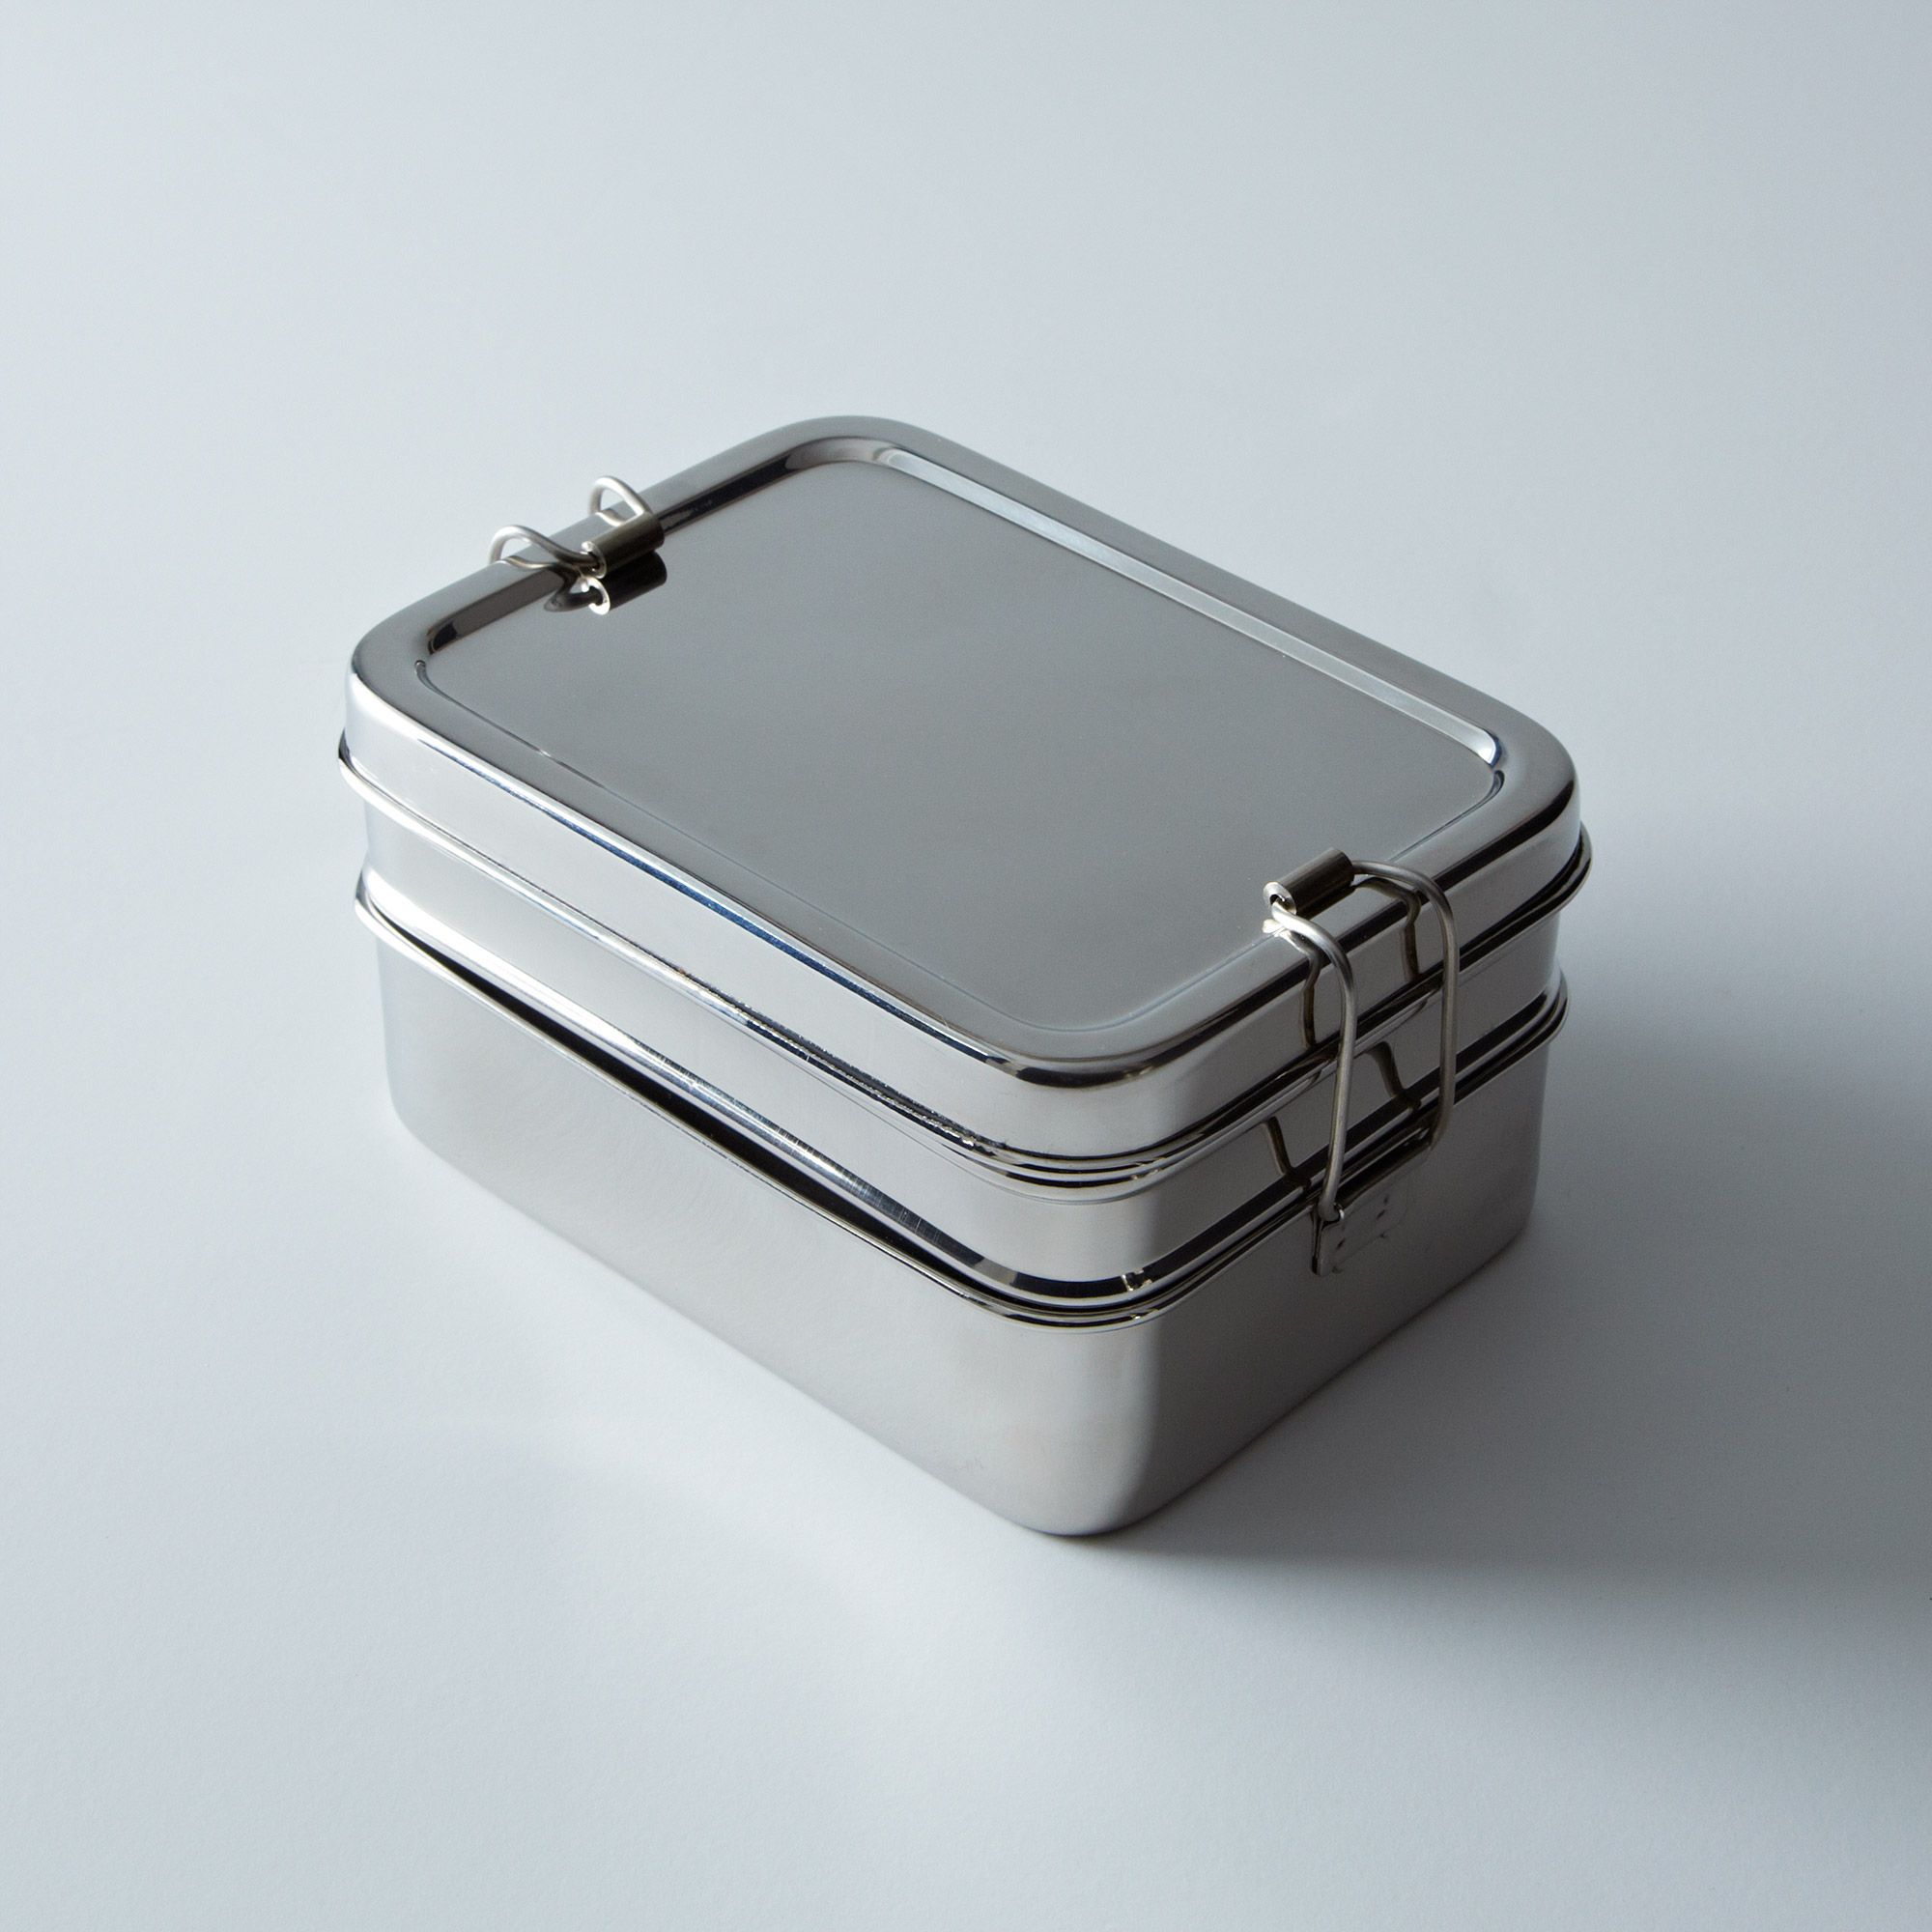 lunchbox by Ethan Wolf